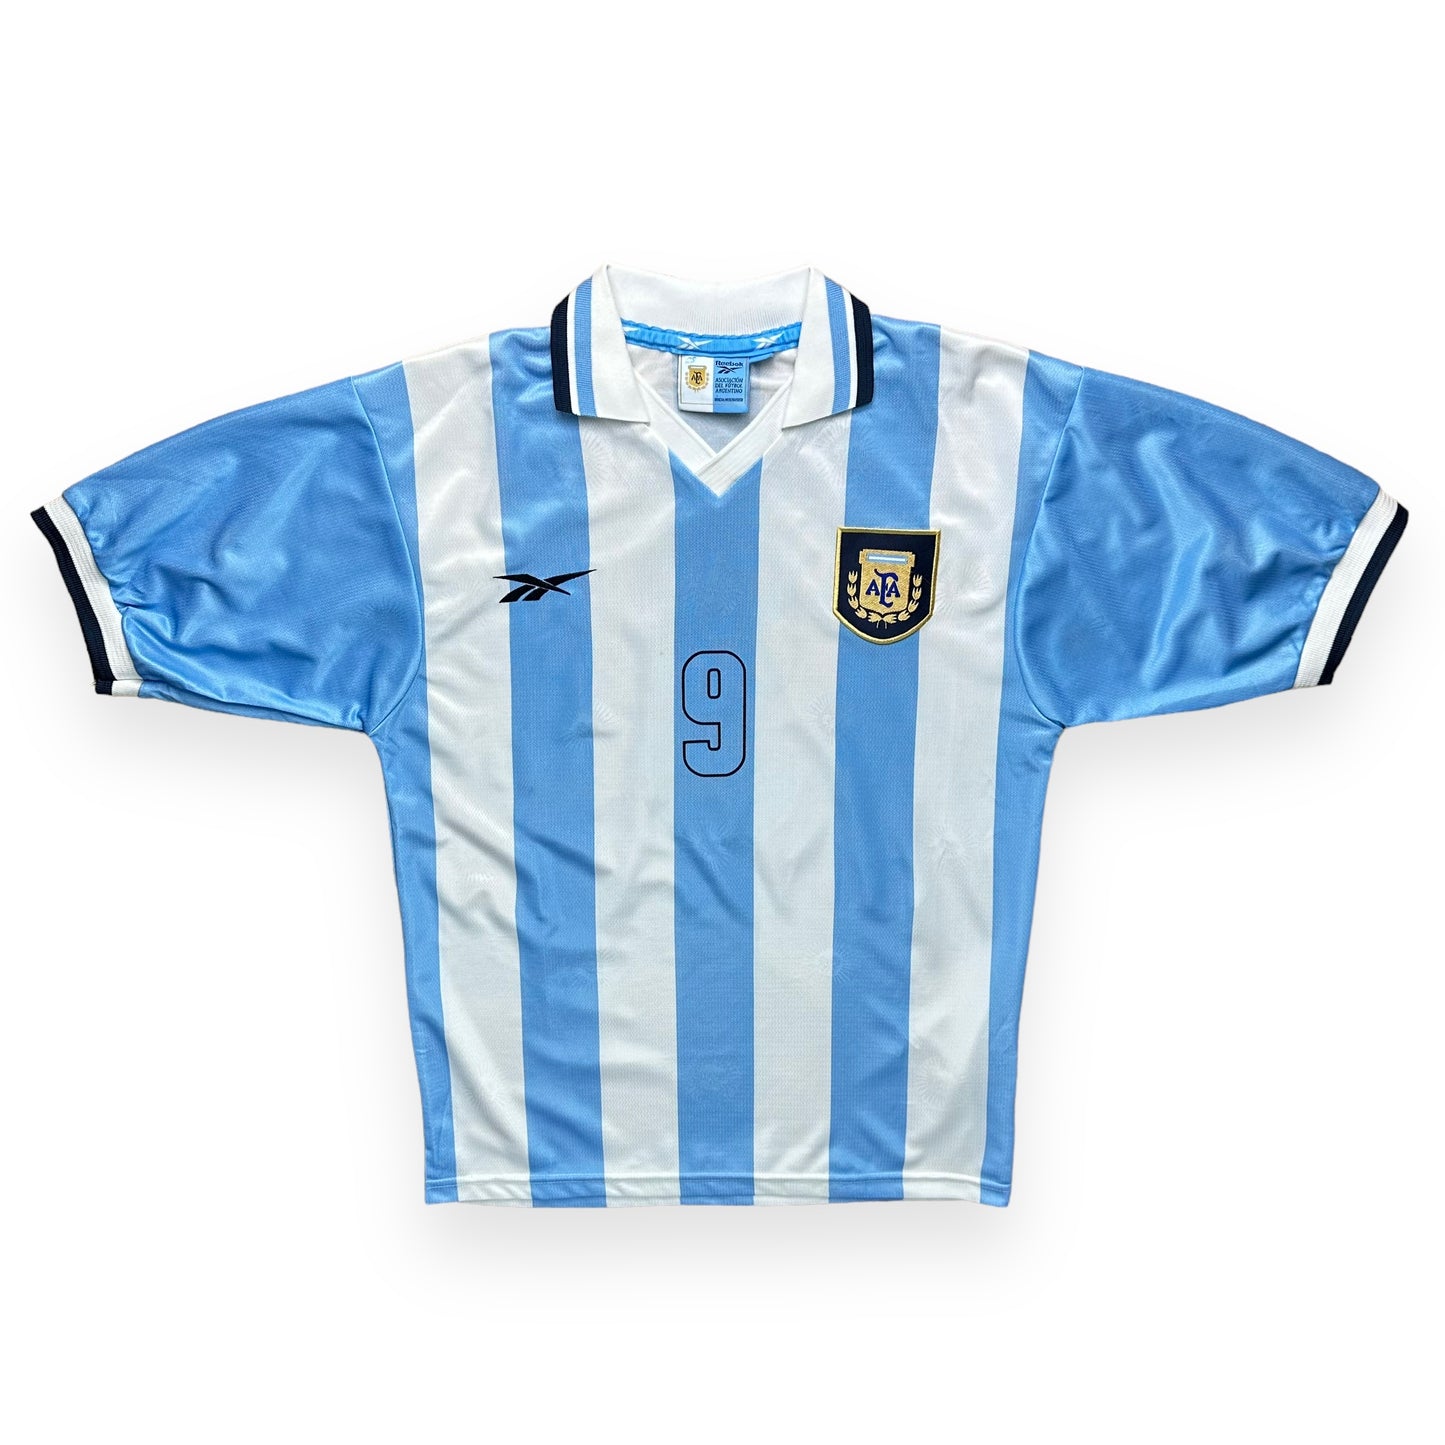 Argentina 1999 Home Shirt (S) Batitusta #9